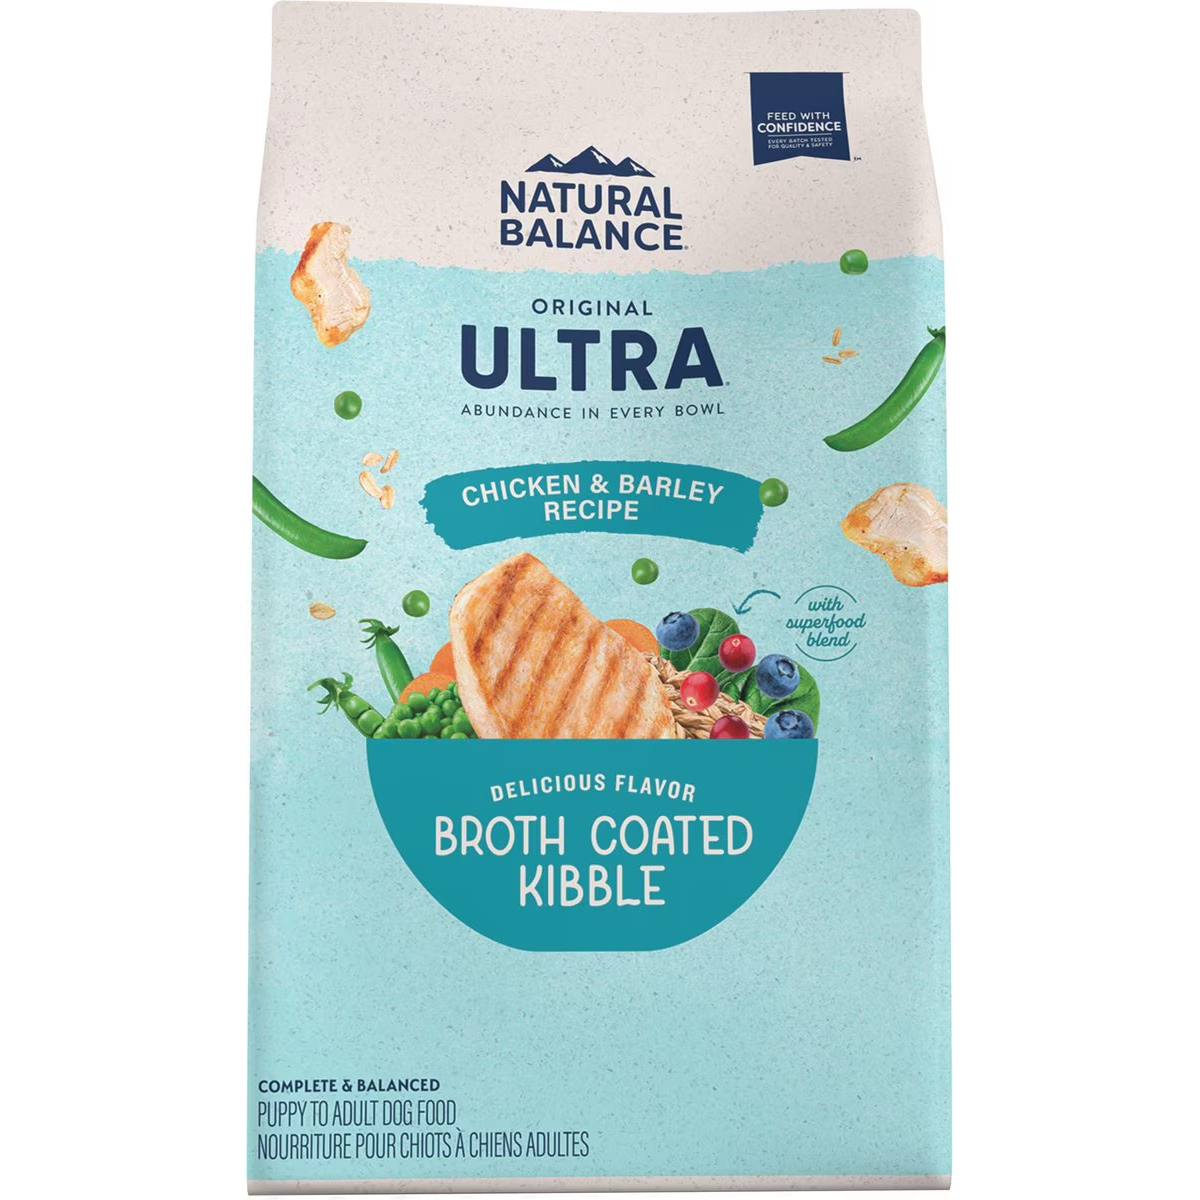 Natural Balance Original Ultra Chicken & Barley Formula Dry Dog Food